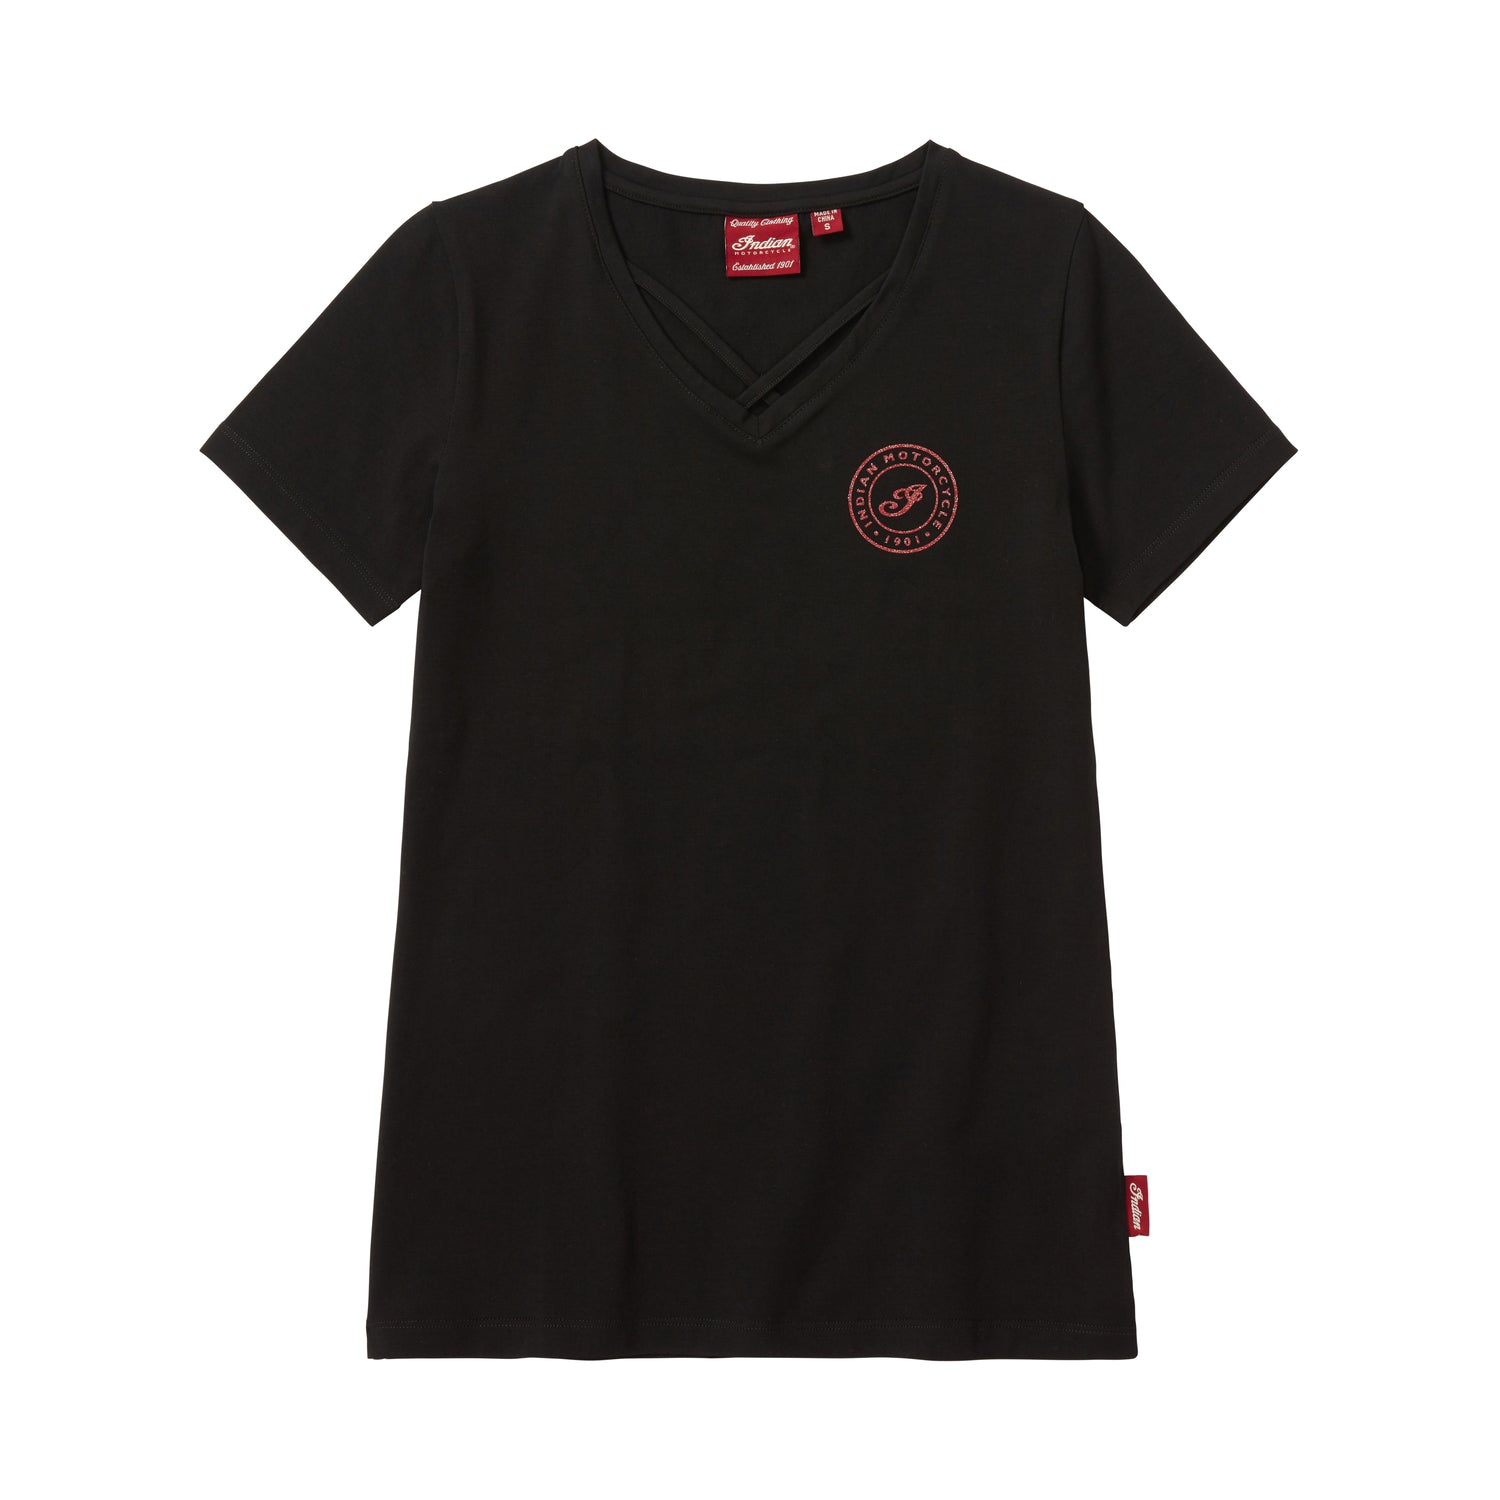 Women's Glitter Graphic T-Shirt, Black